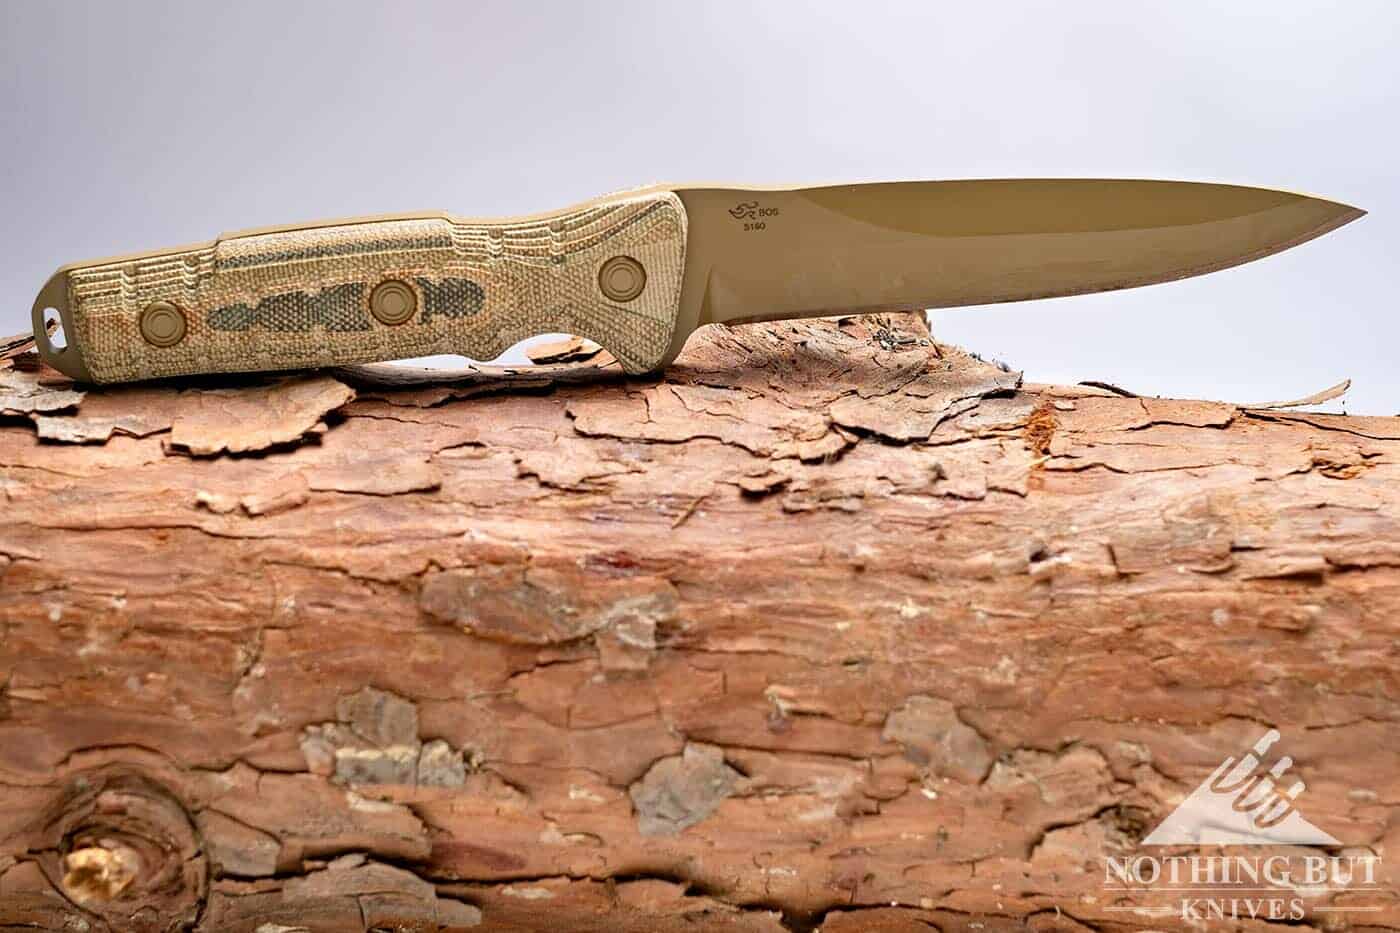 The Buck Ground Combat Knife (GCK) sitting on a log